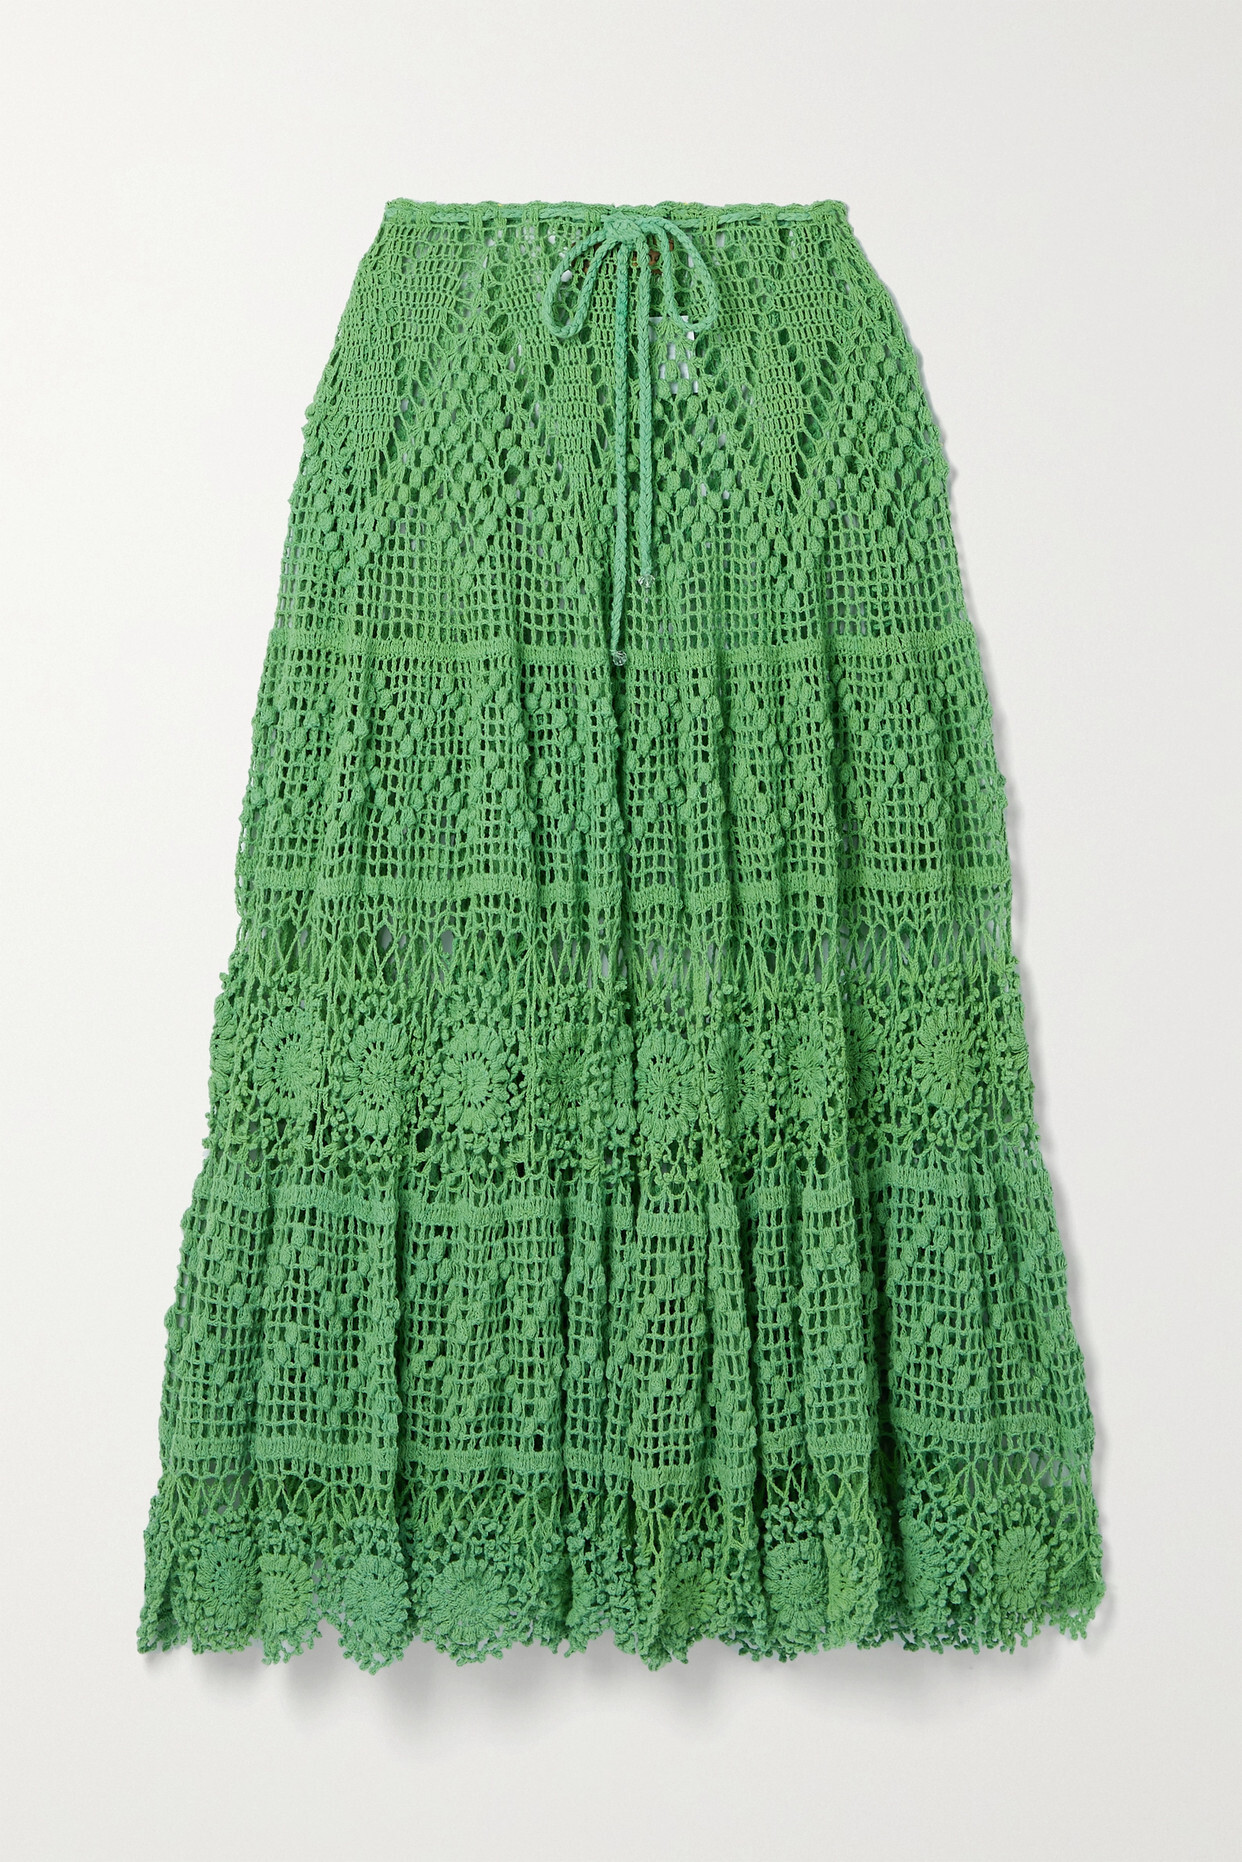 Alix Pinho - Joyce Crocheted Cotton Maxi Skirt - Green